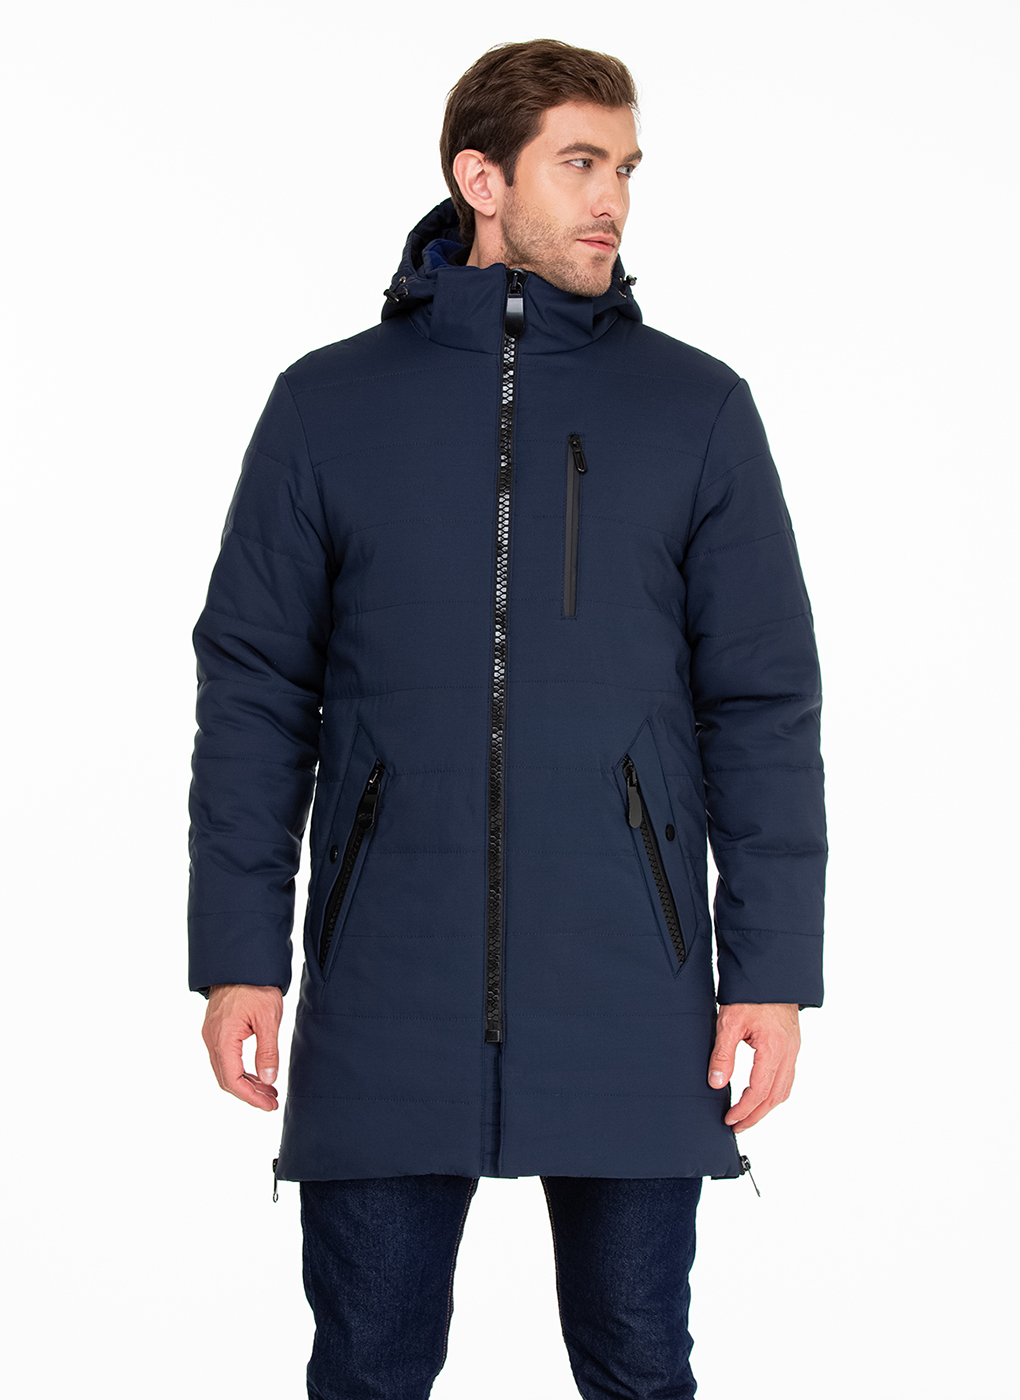 Зимняя куртка мужская Amimoda 65196 синяя 50 RU